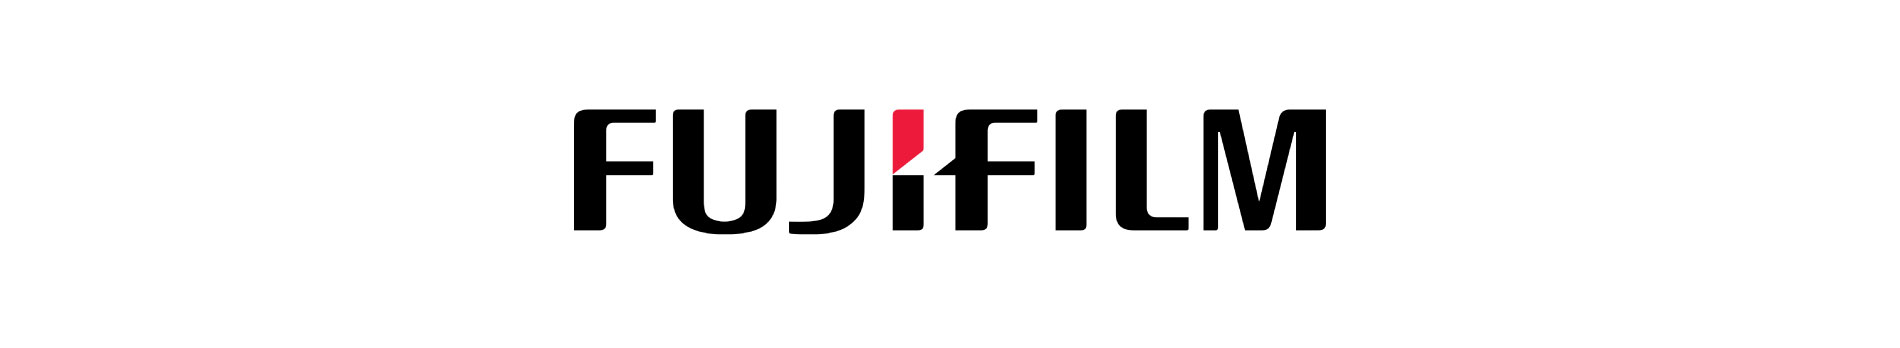 fujifilm-top